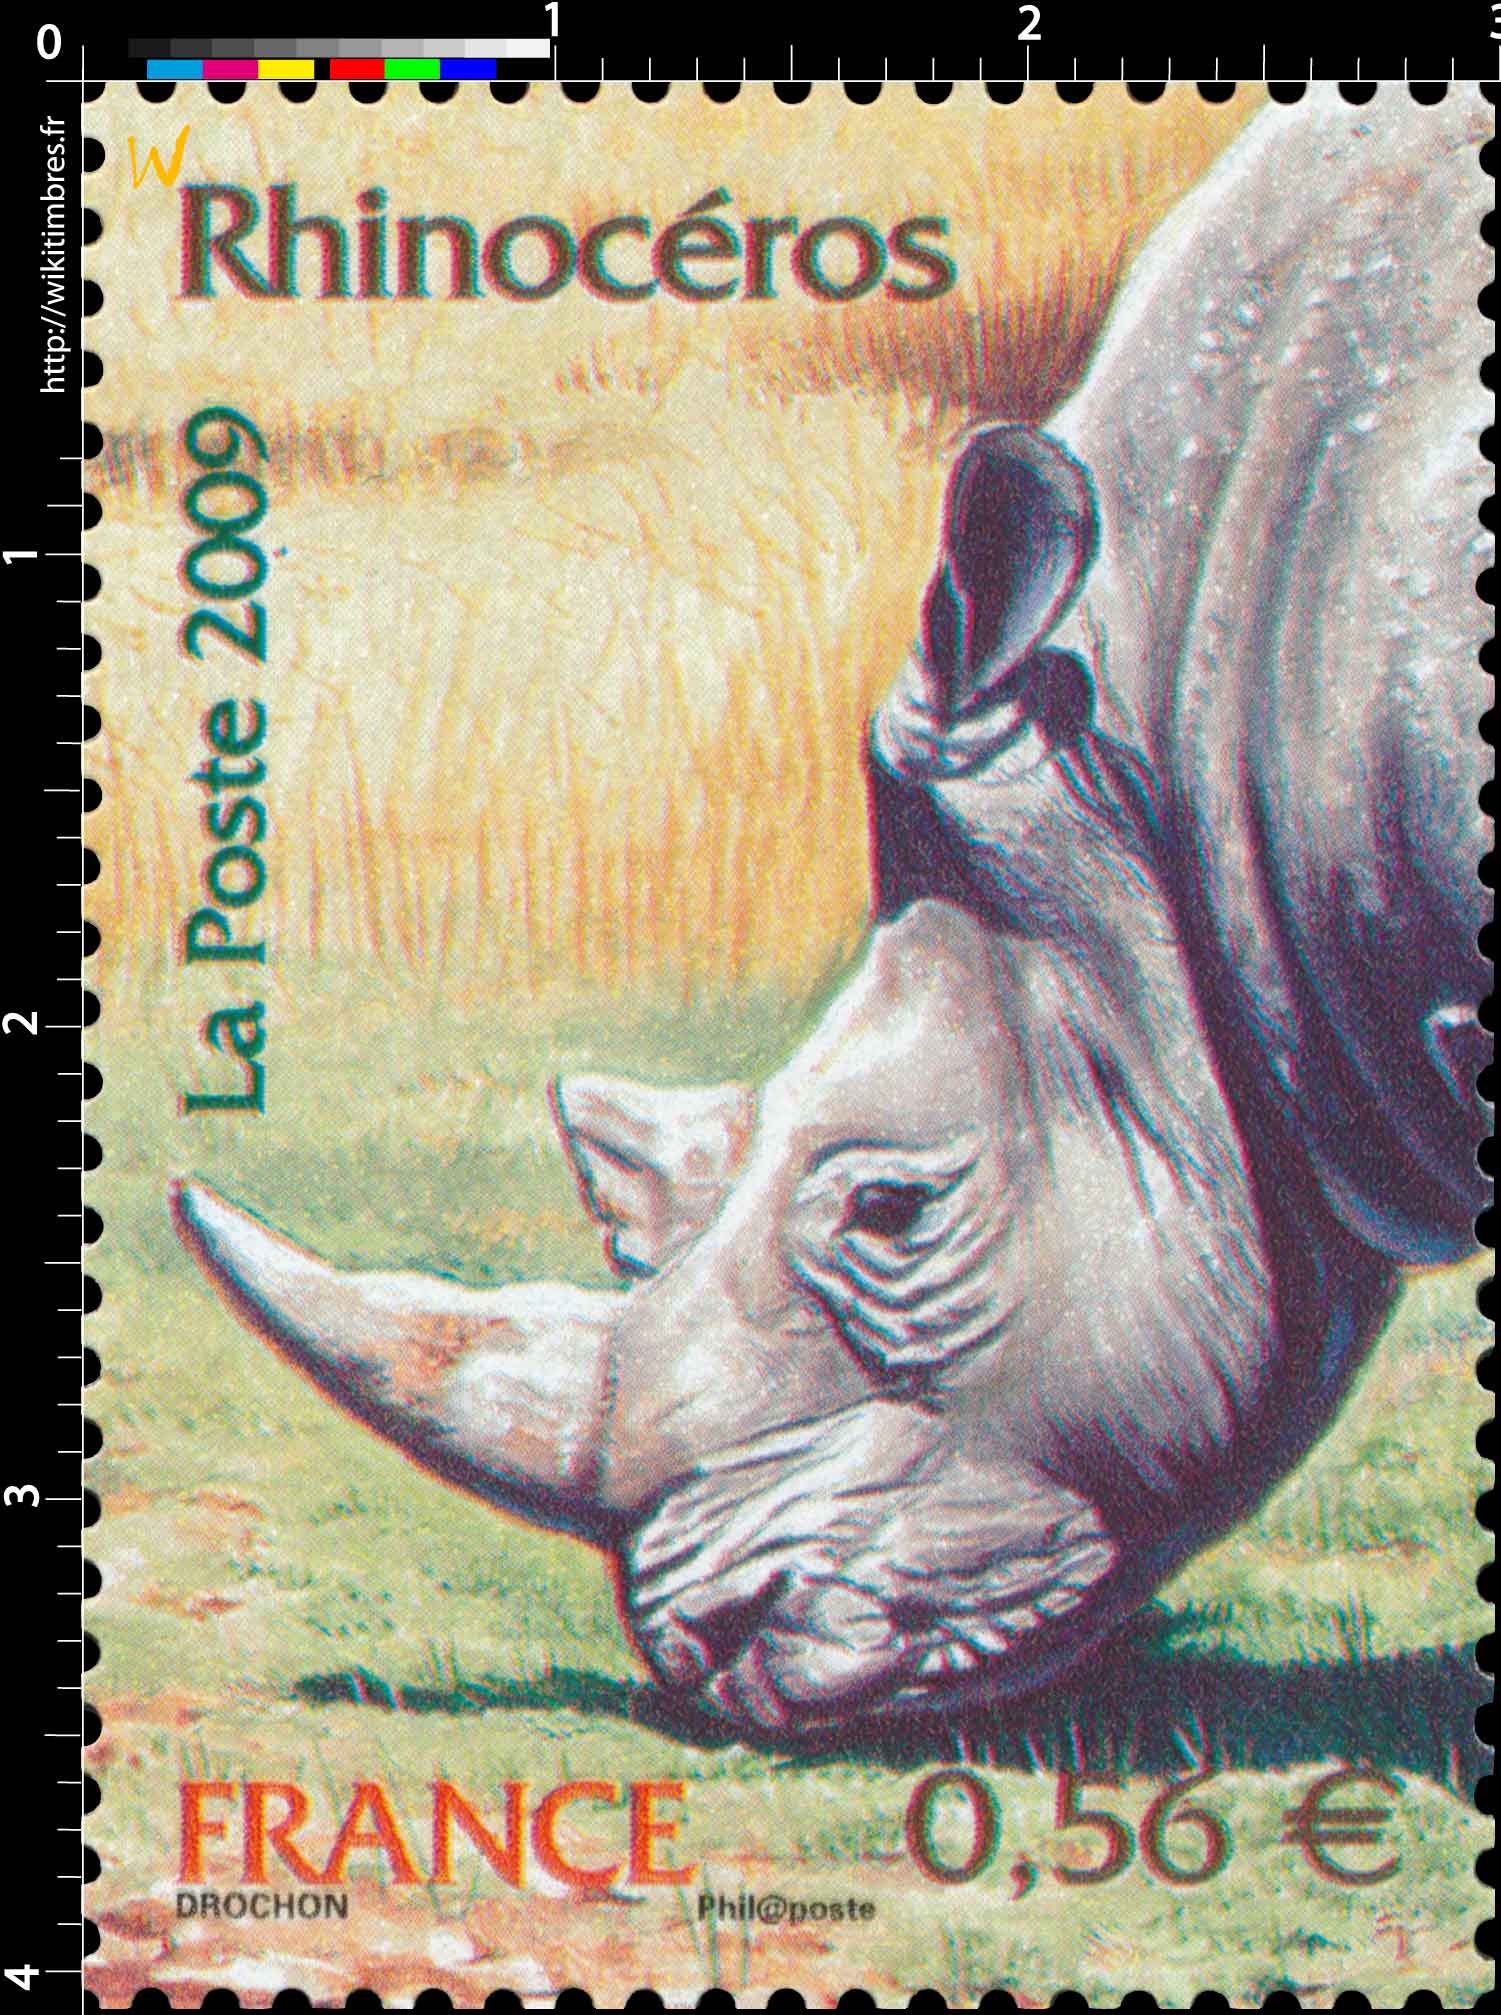 2009 Rhinocéros